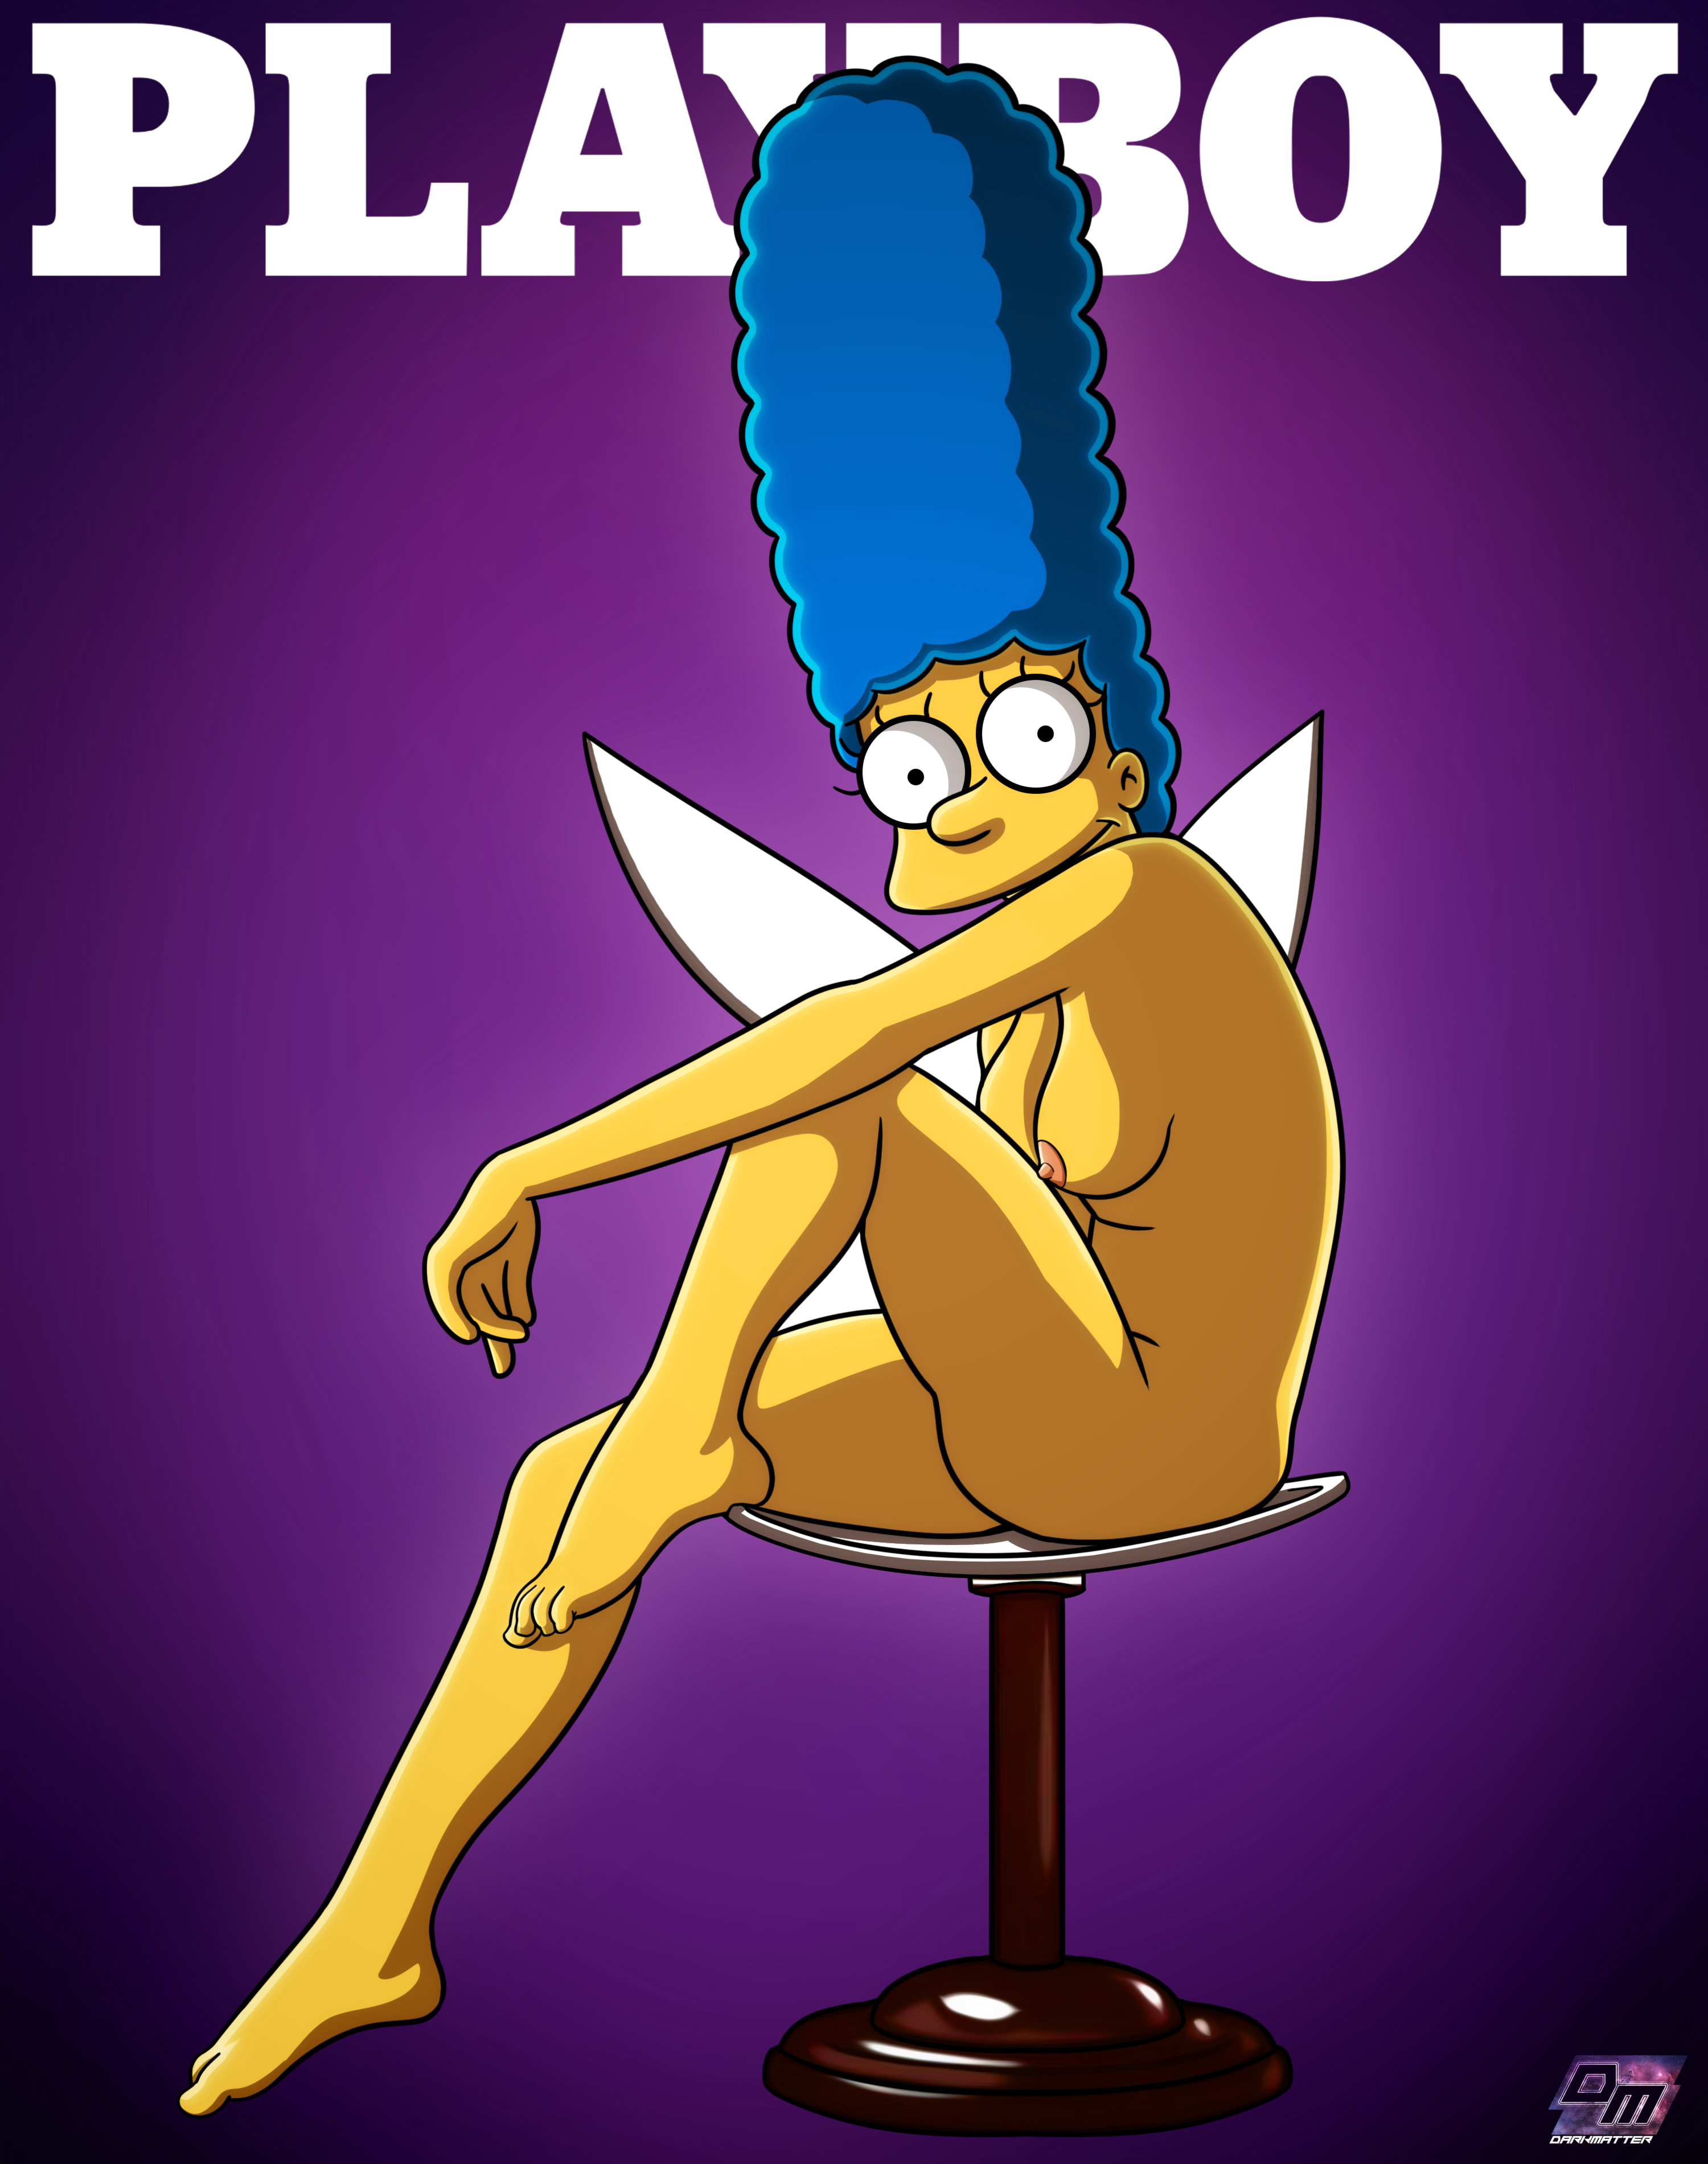 Marge simpson nackt playboy